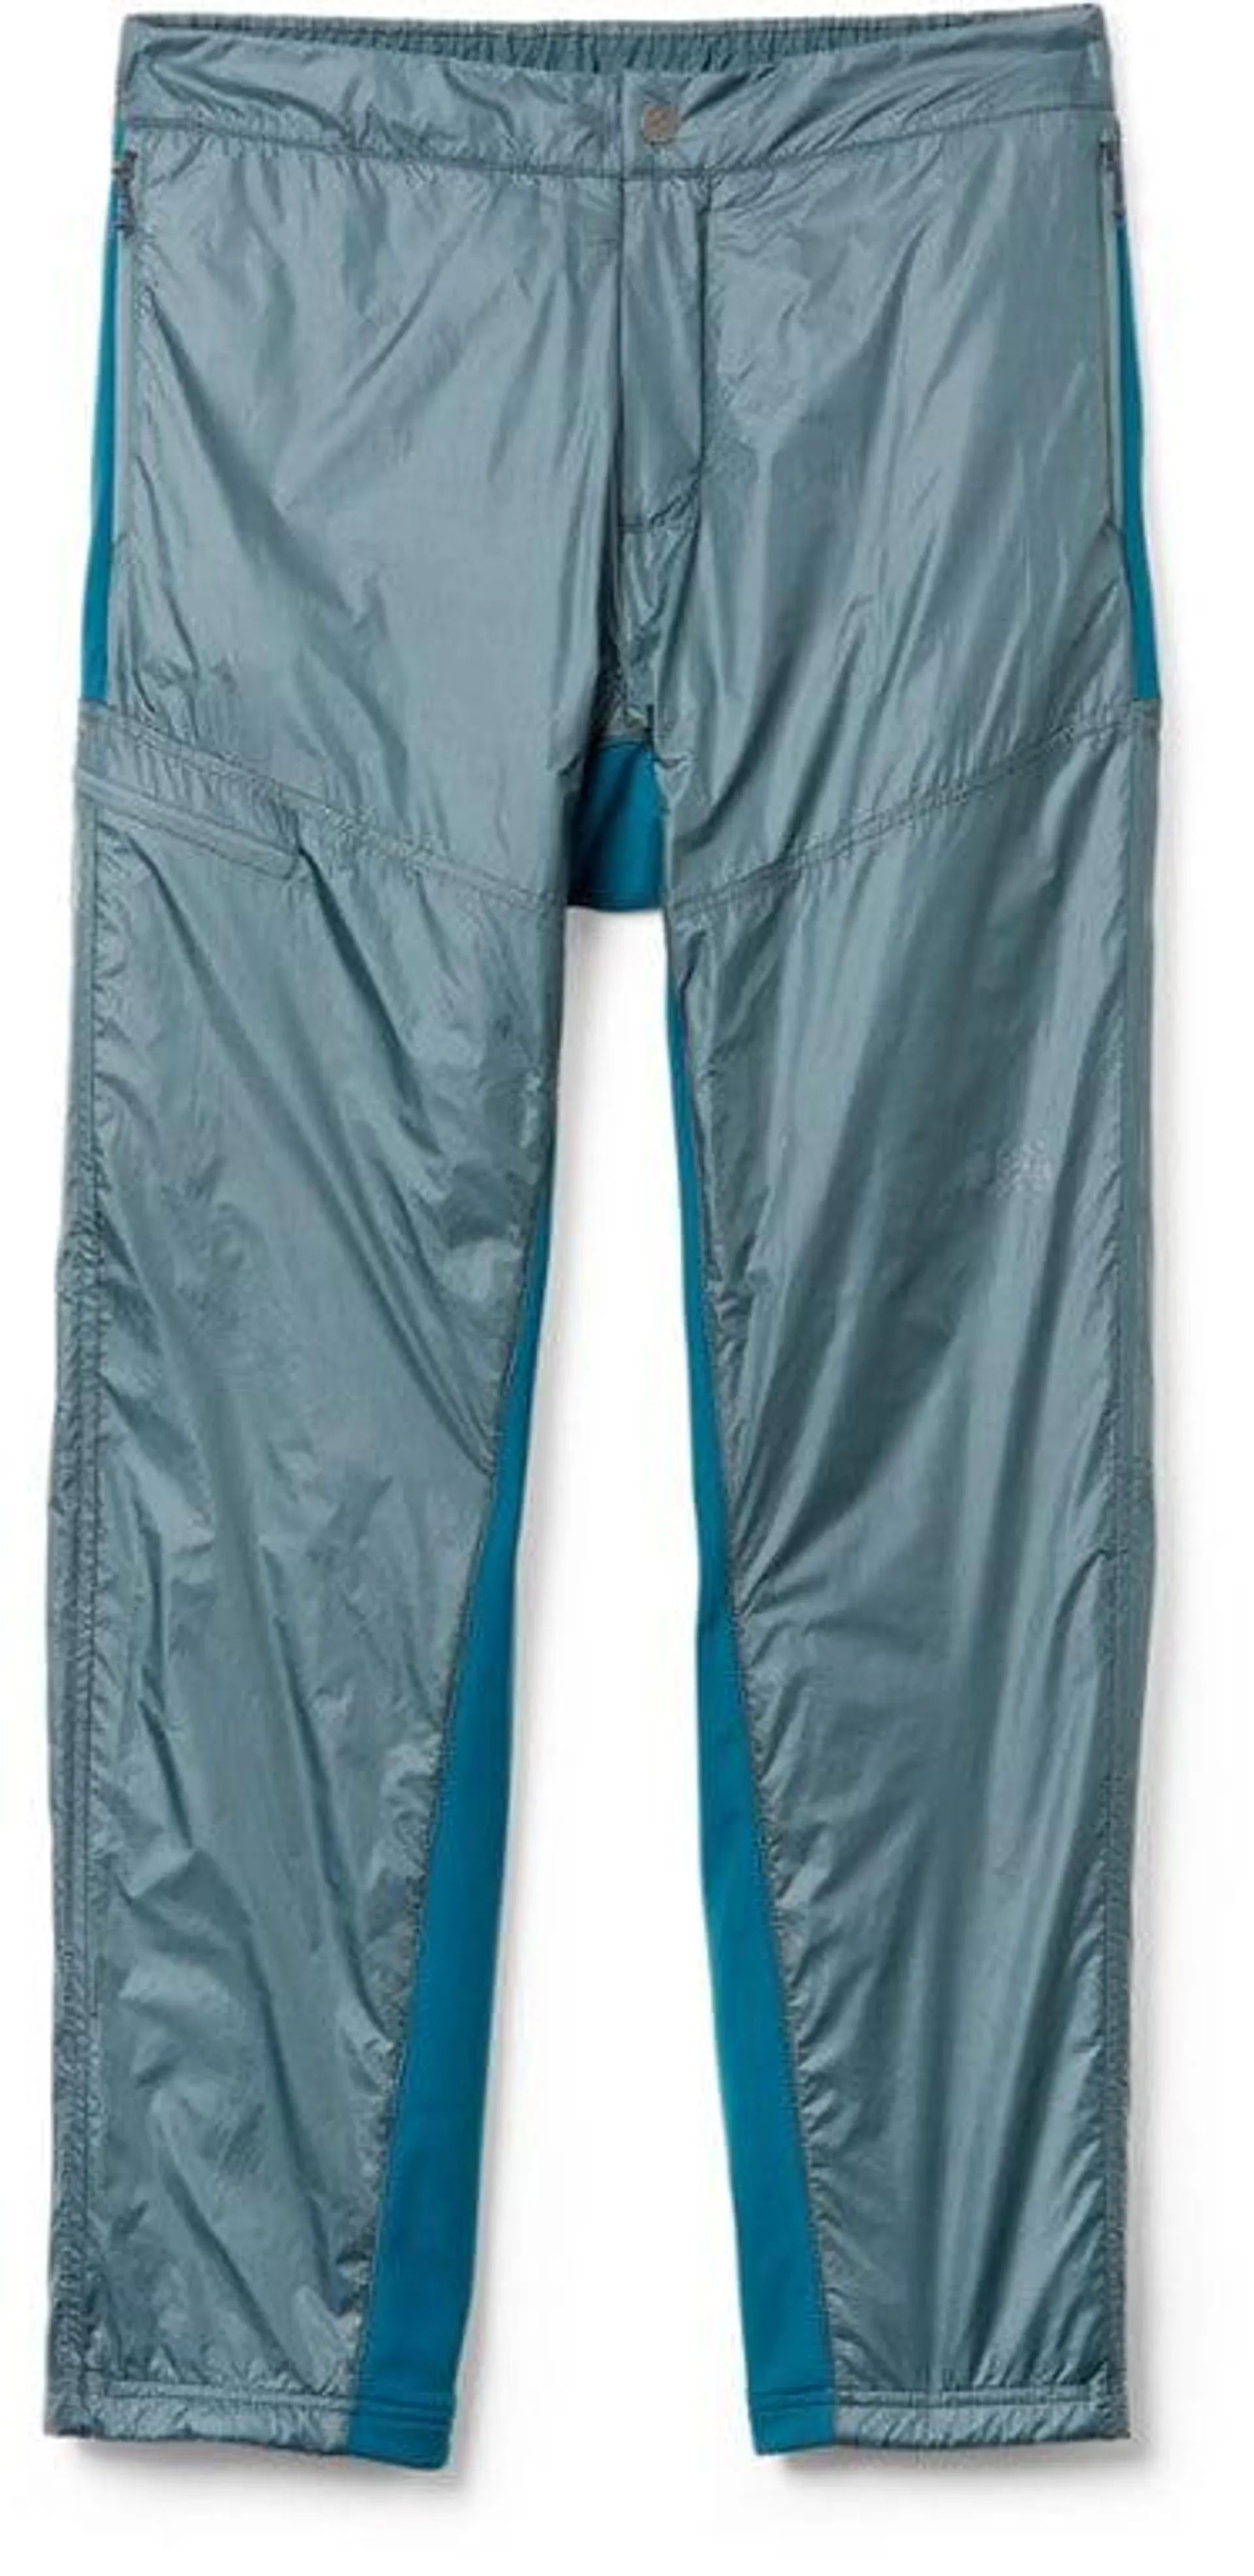 REI Co-op Flash Insulated Hybrid Pants - Men's